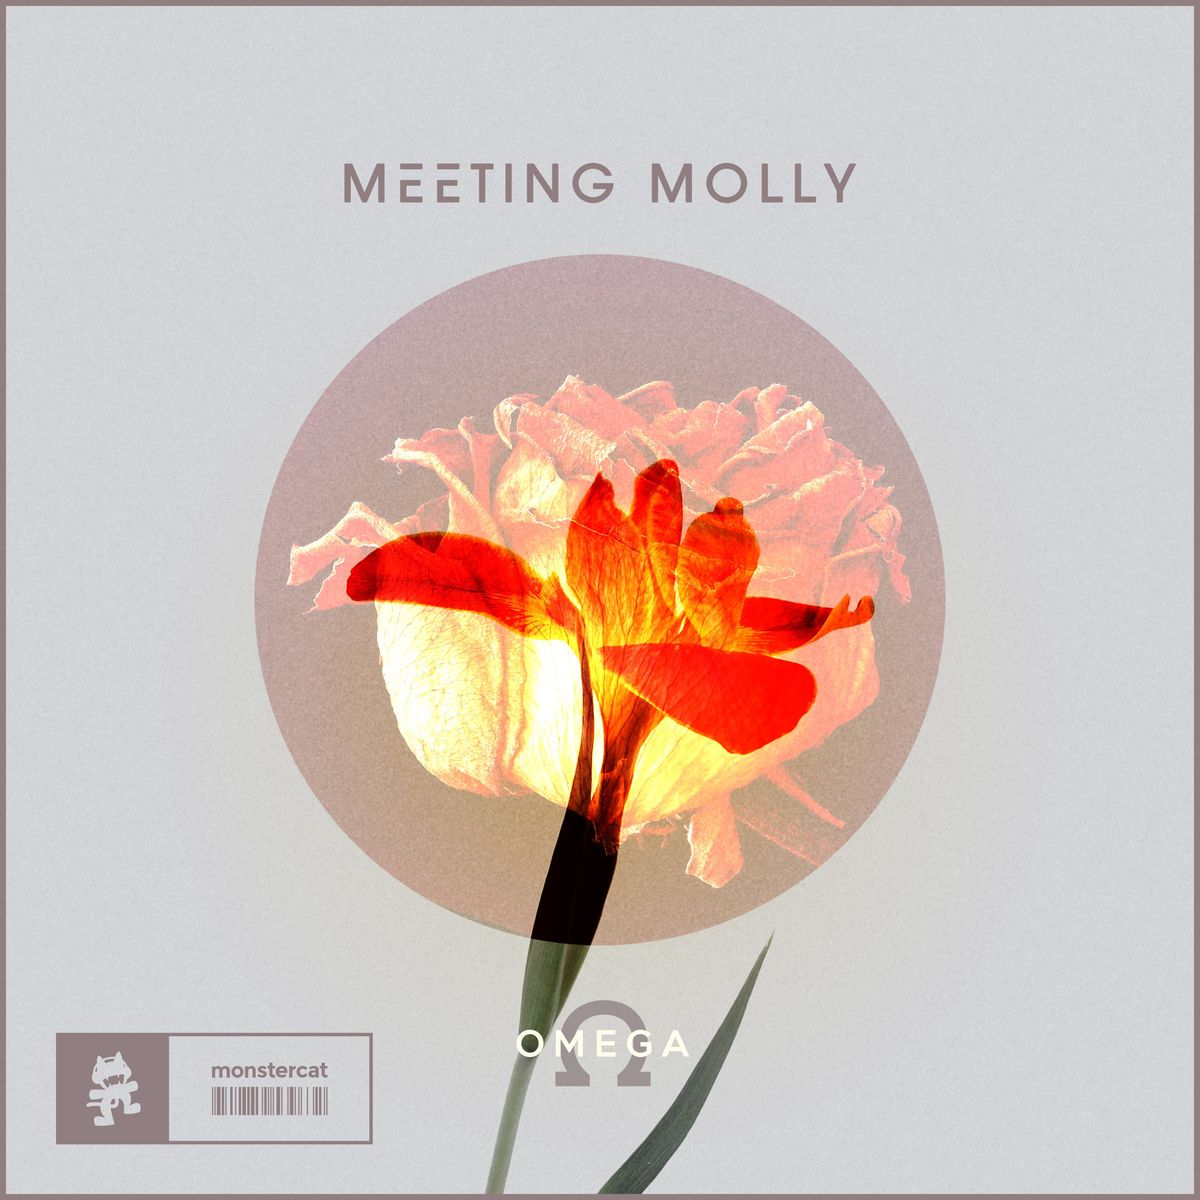 Meeting Molly - Omega [MCEP240]